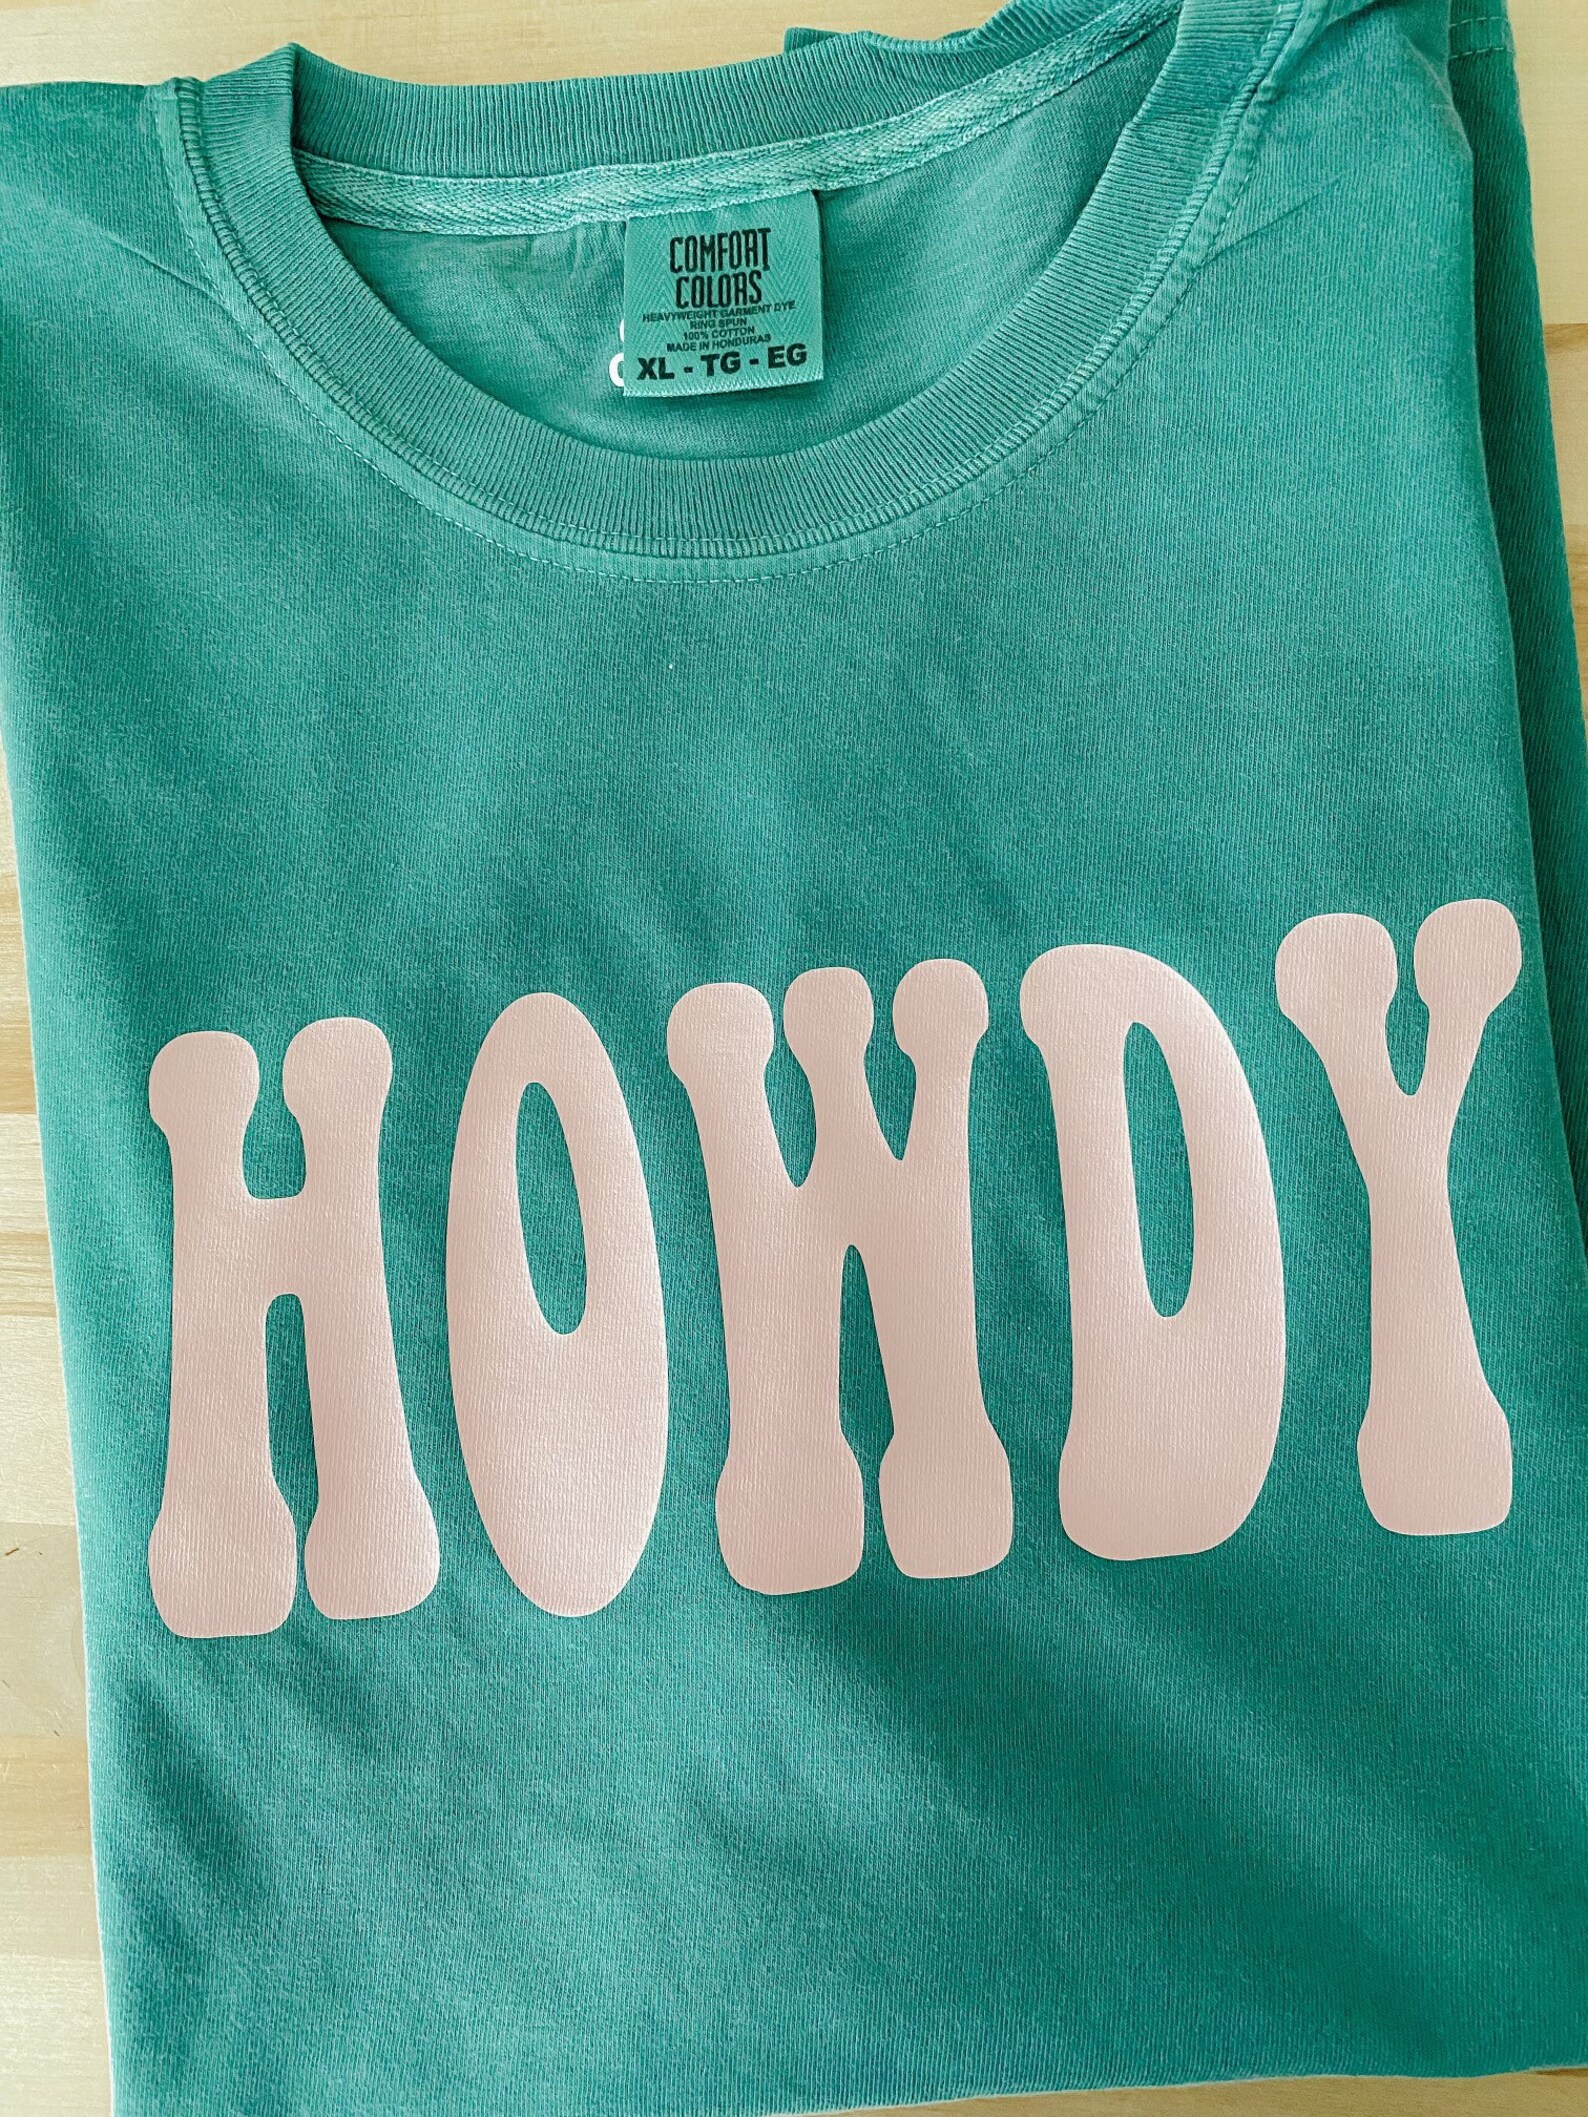 Howdy Tshirt Comfort Colors Tshirts Western Cowboy Shirt - Etsy Canada